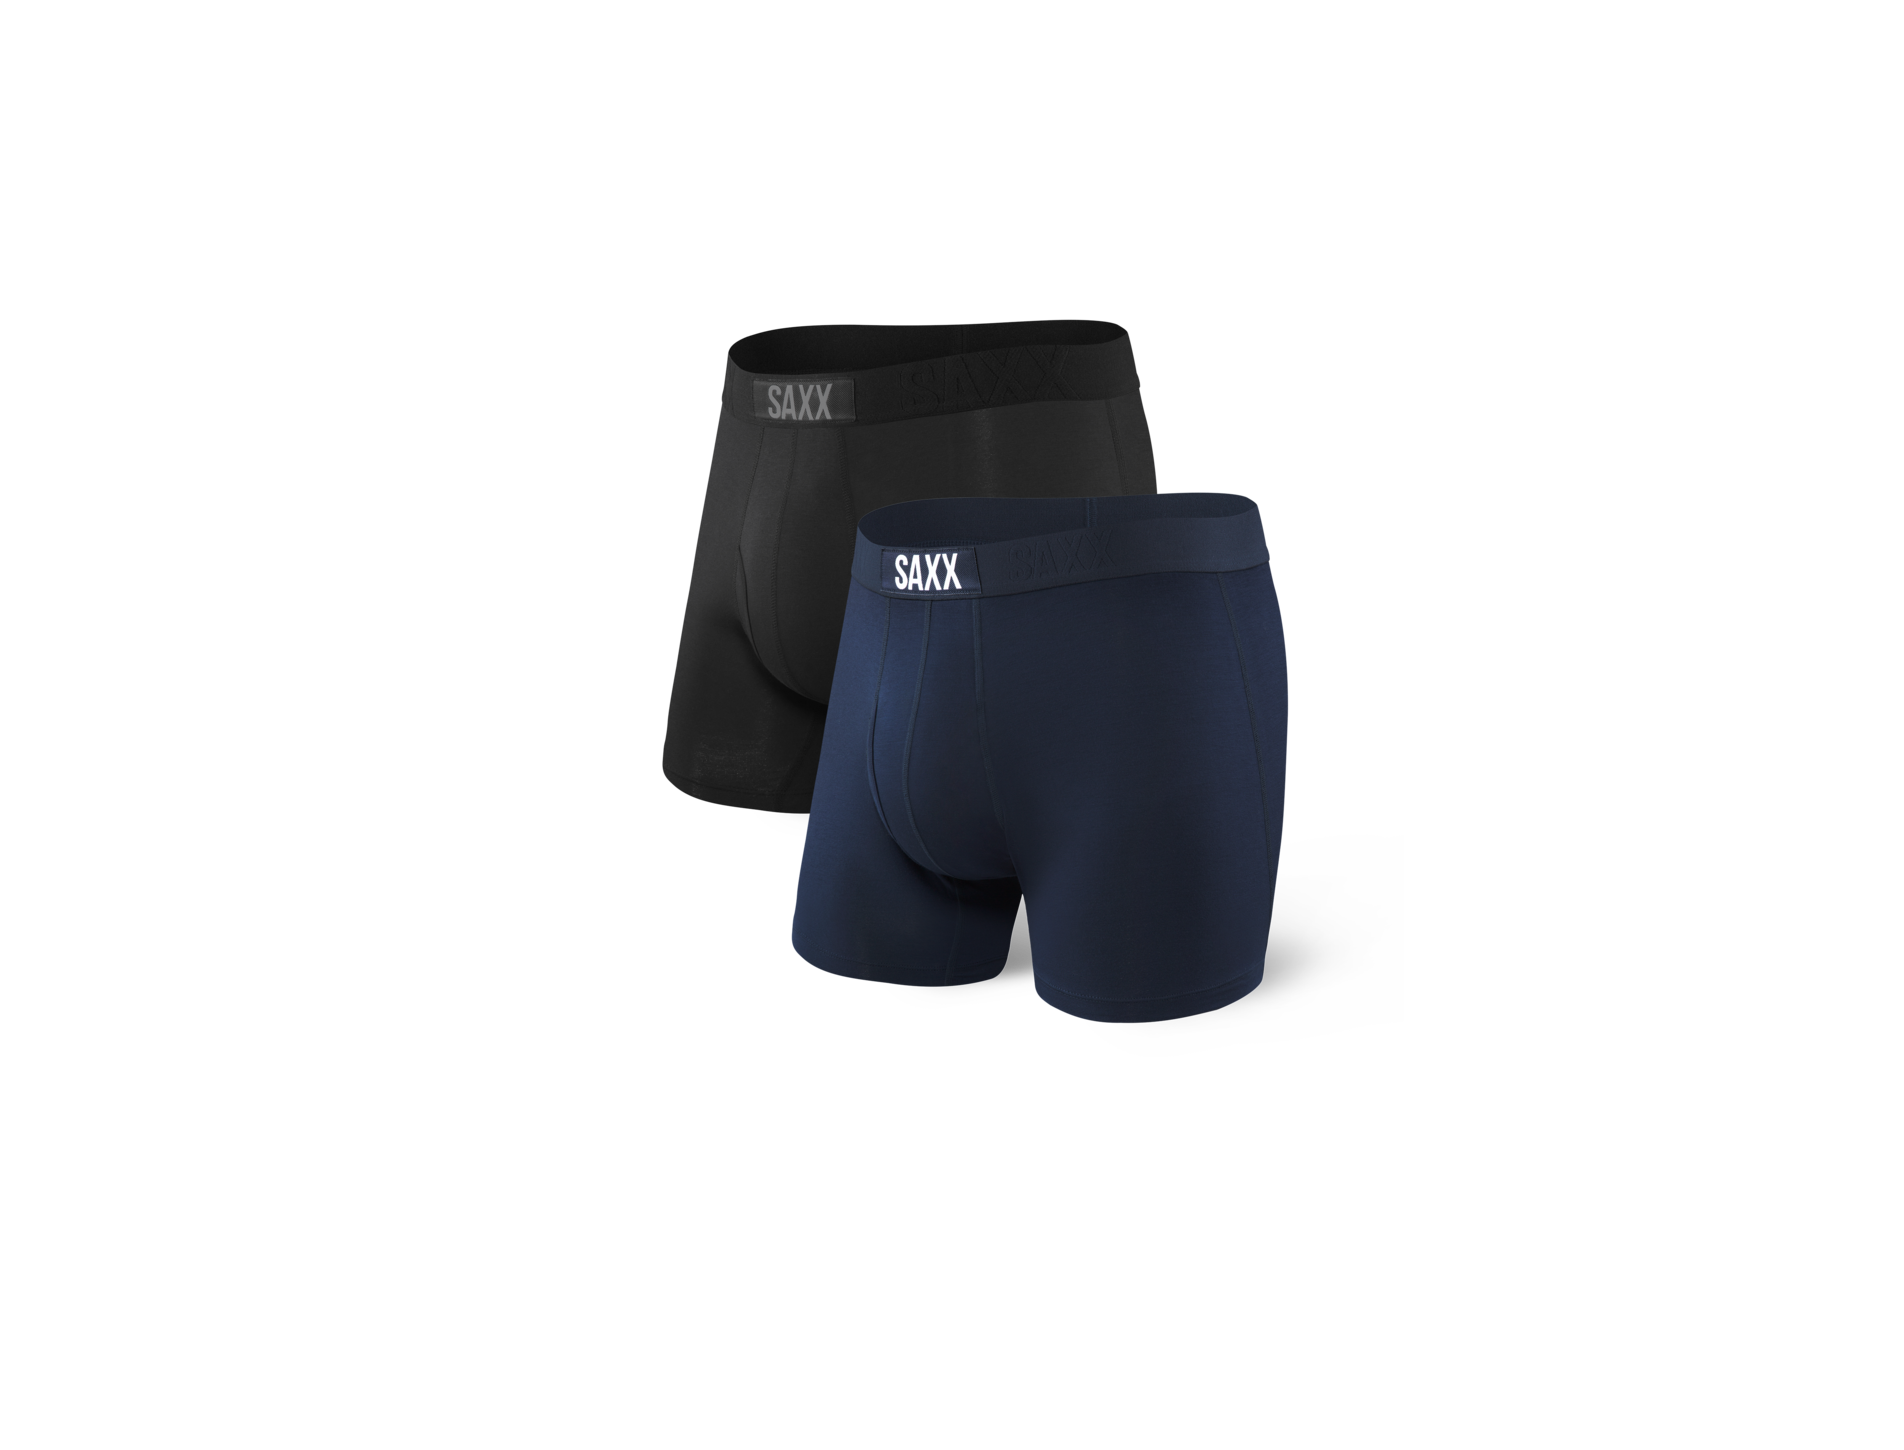 Vibe 3-Pack Men's Boxer Brief - Black/Grey/Navy